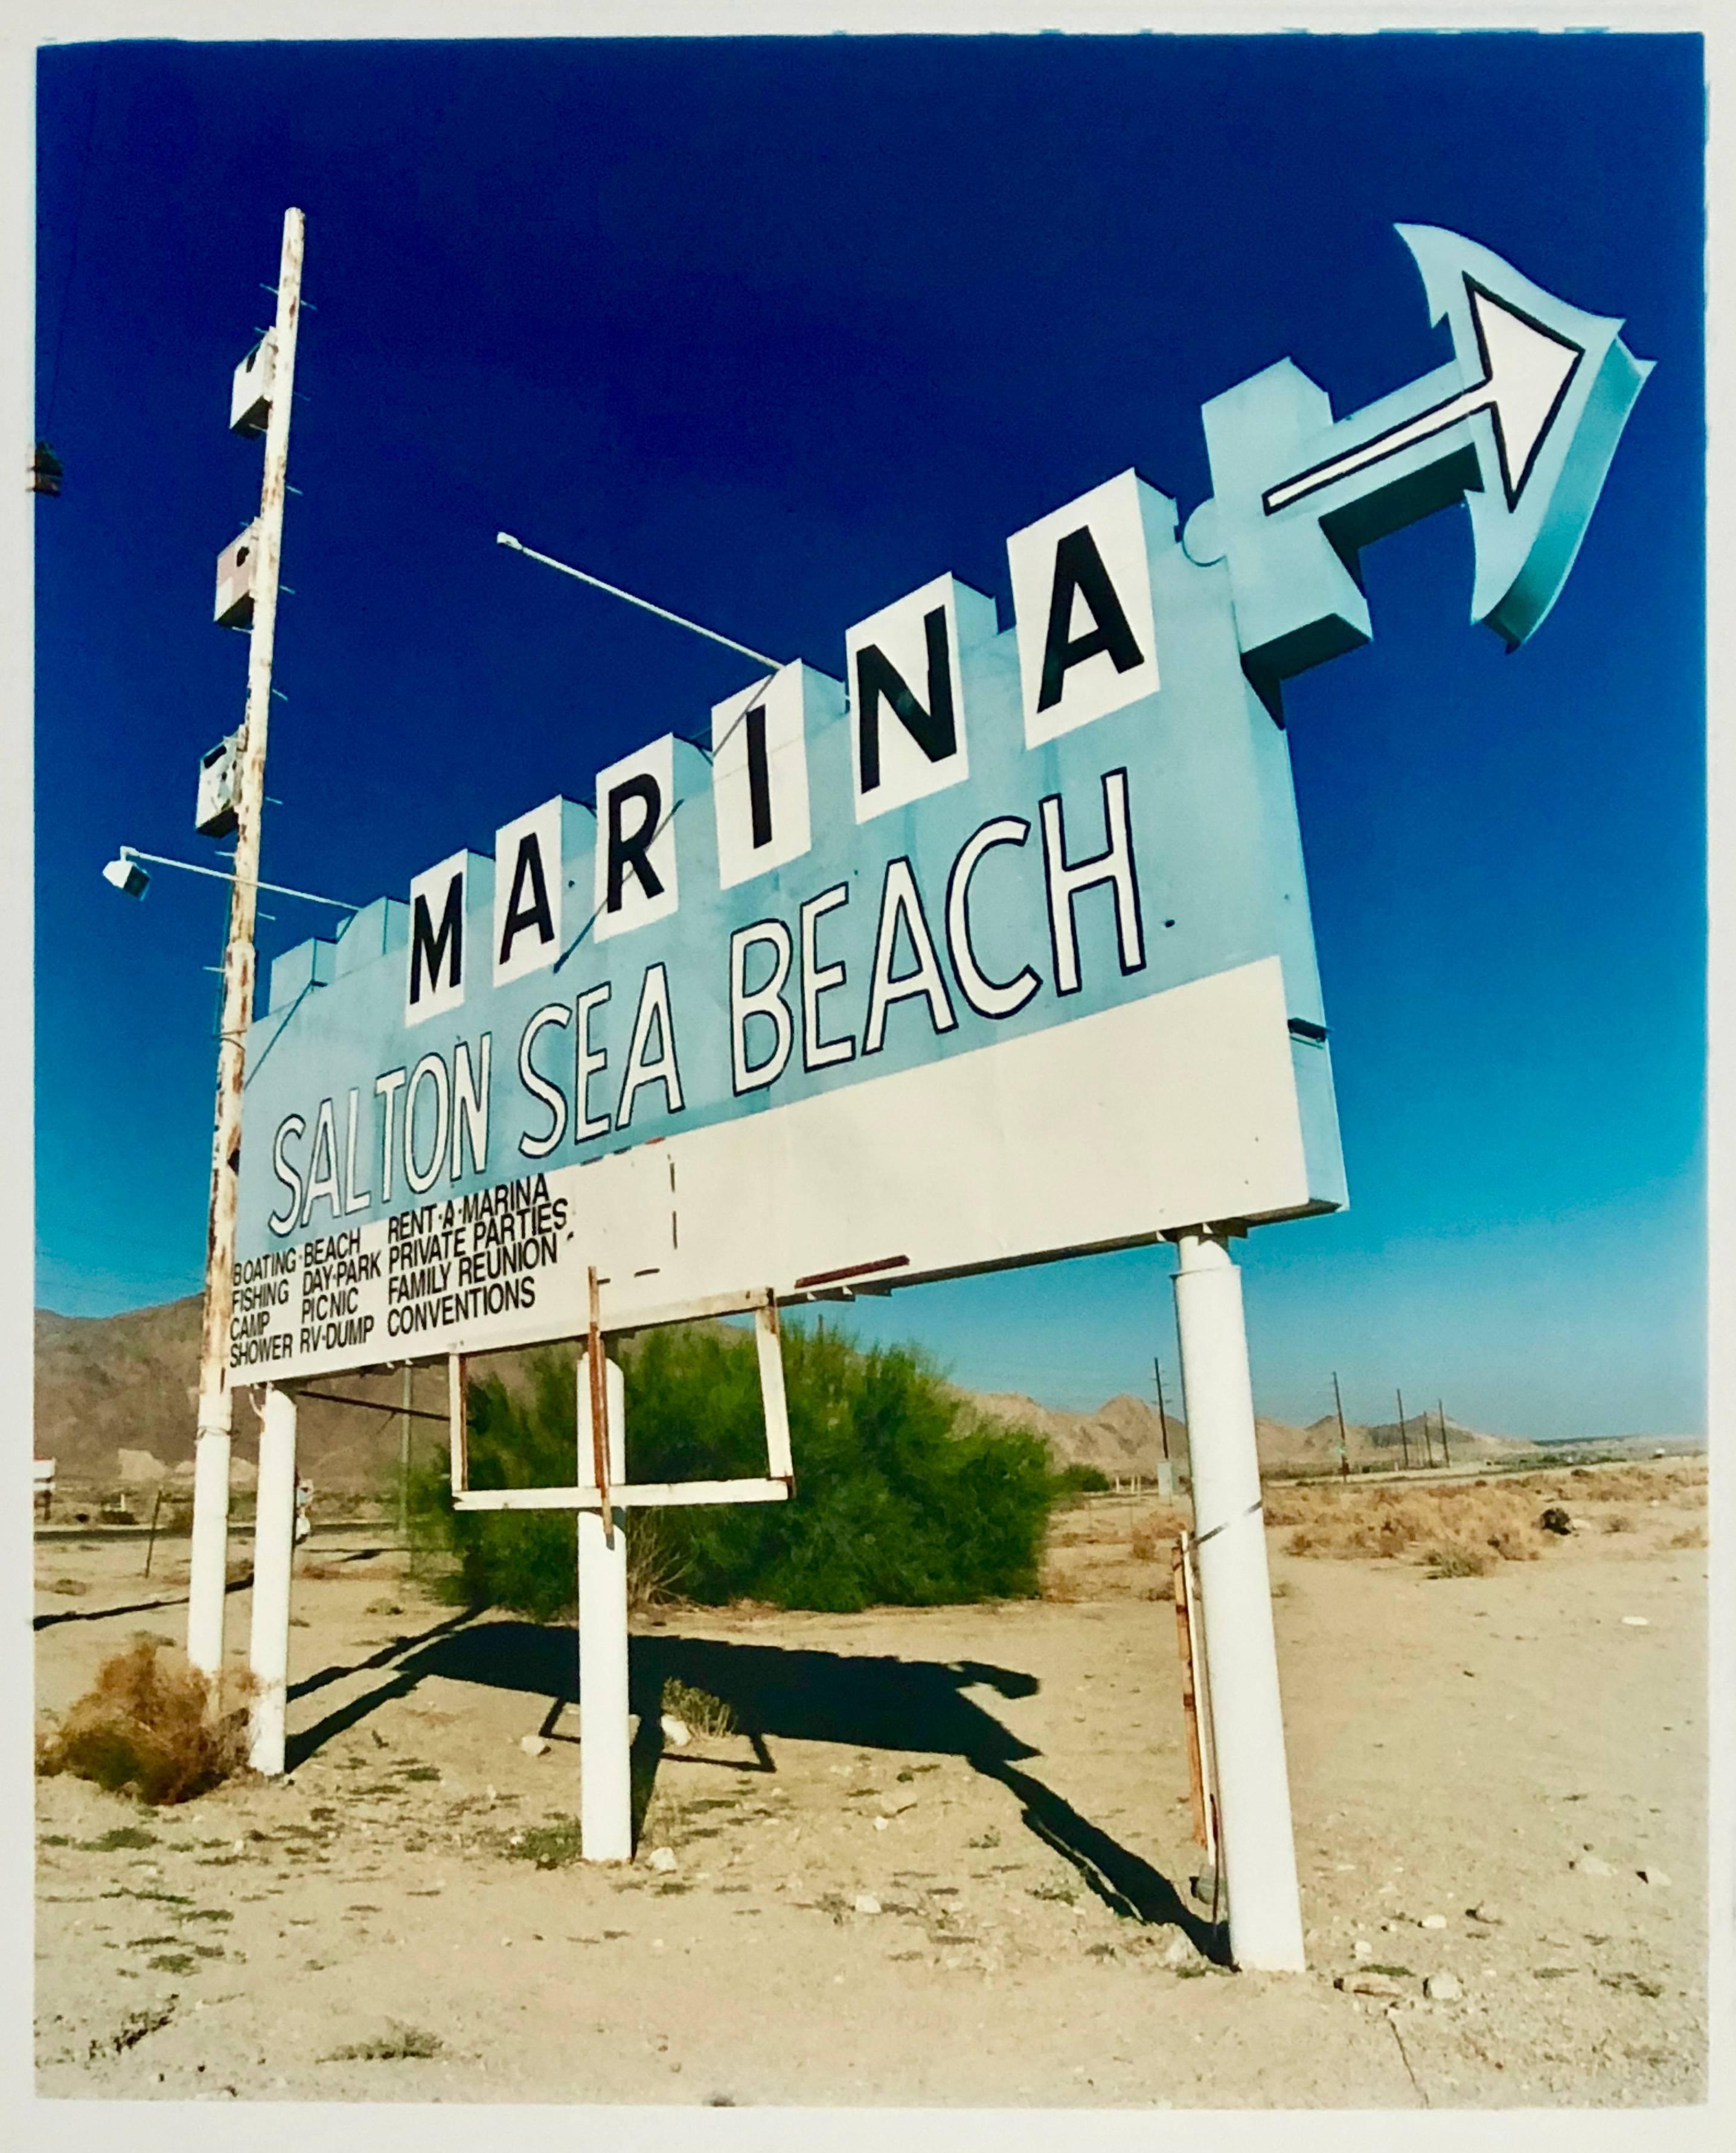 Richard Heeps Color Photograph – Marina Sign I, Salton Sea Beach, Kalifornien - Straßenschilder-Farbfotografie